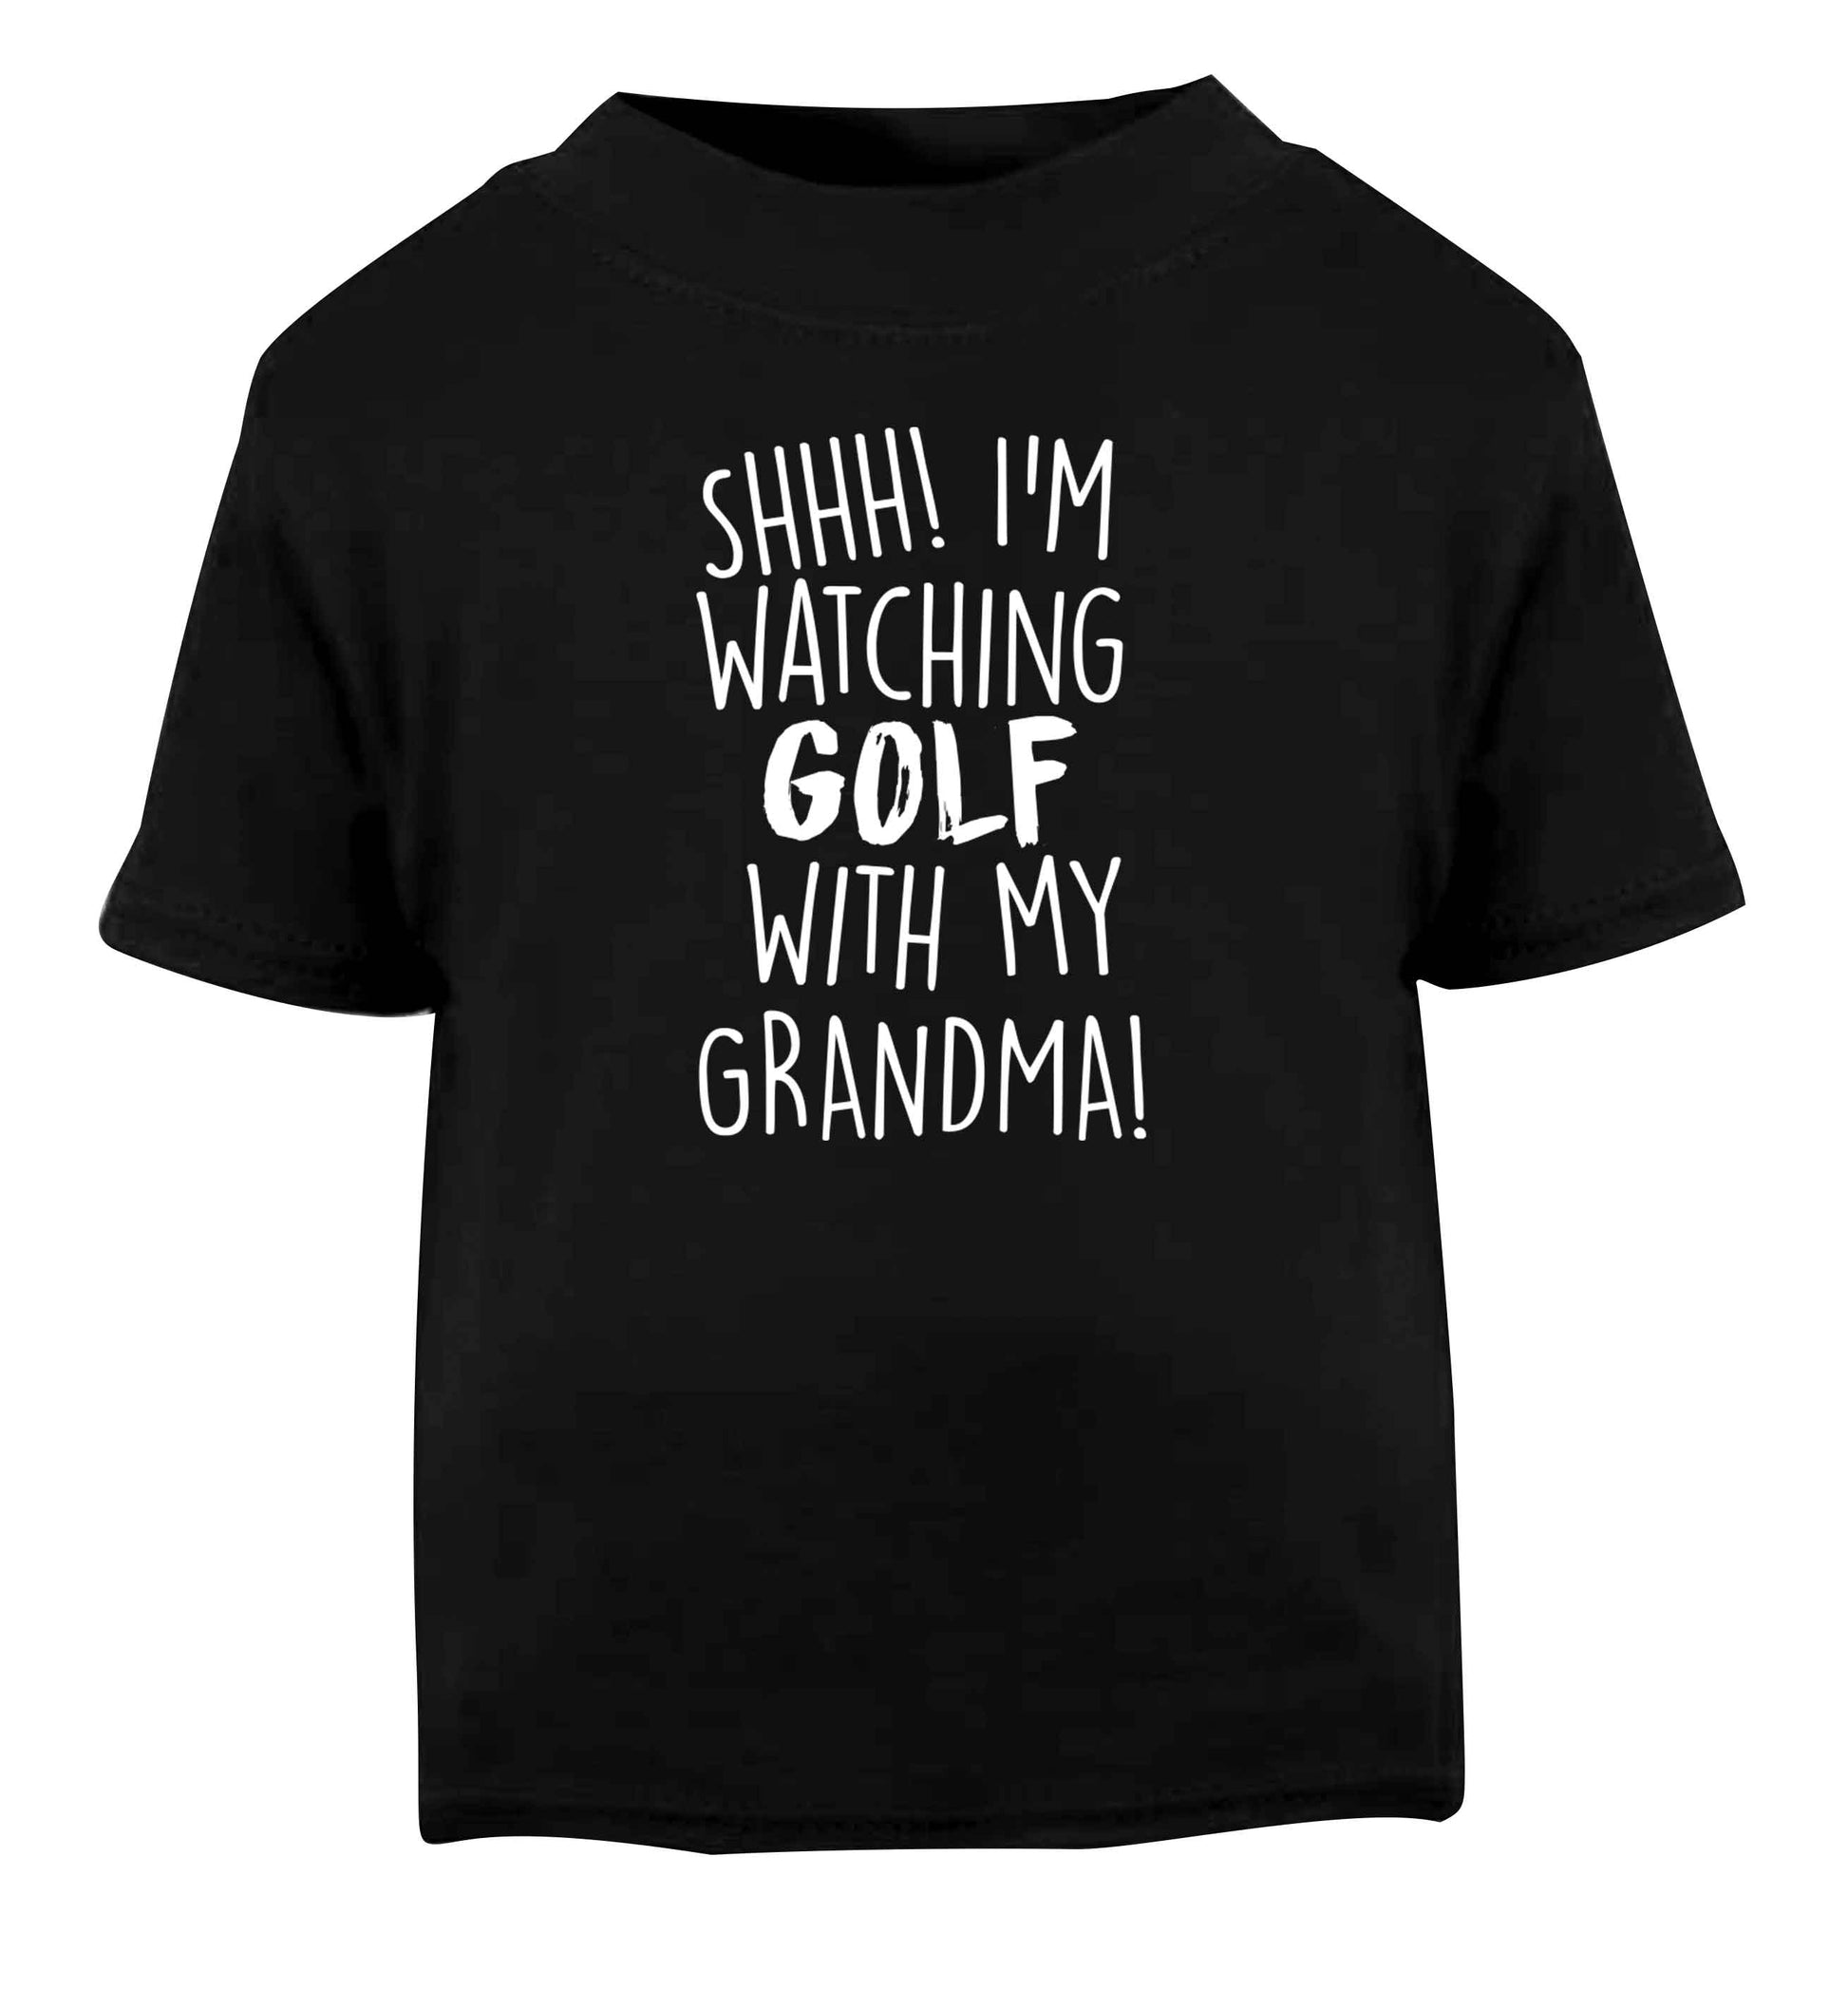 Shh I'm watching golf with my grandma Black Baby Toddler Tshirt 2 years